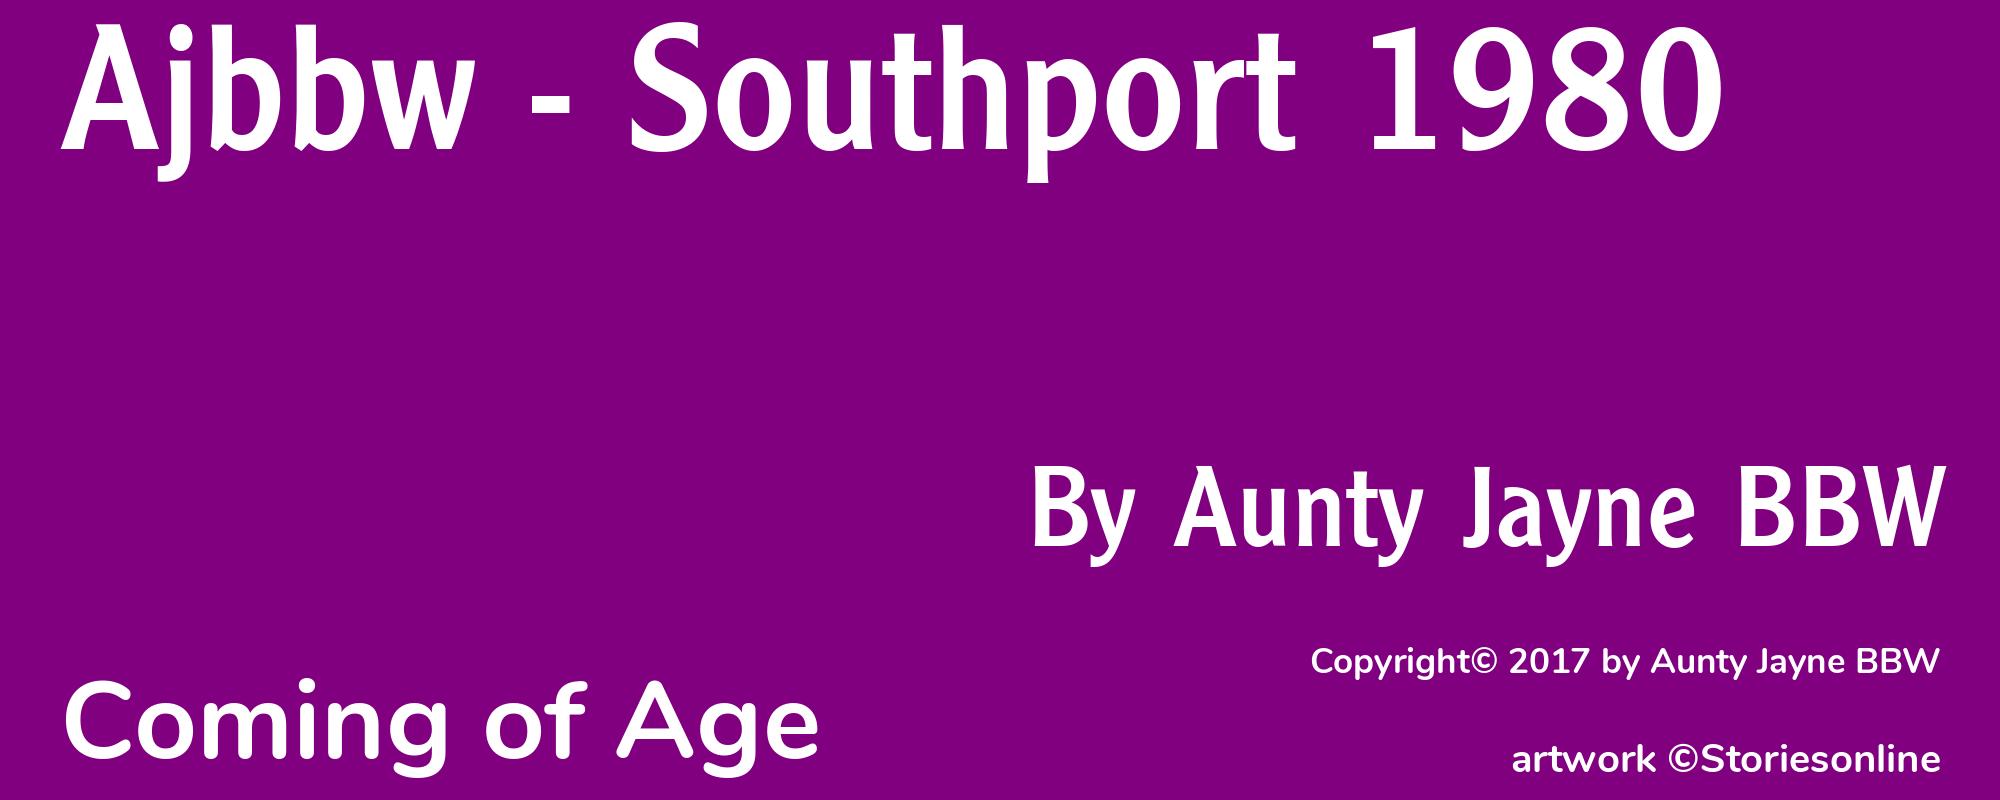 Ajbbw - Southport 1980 - Cover